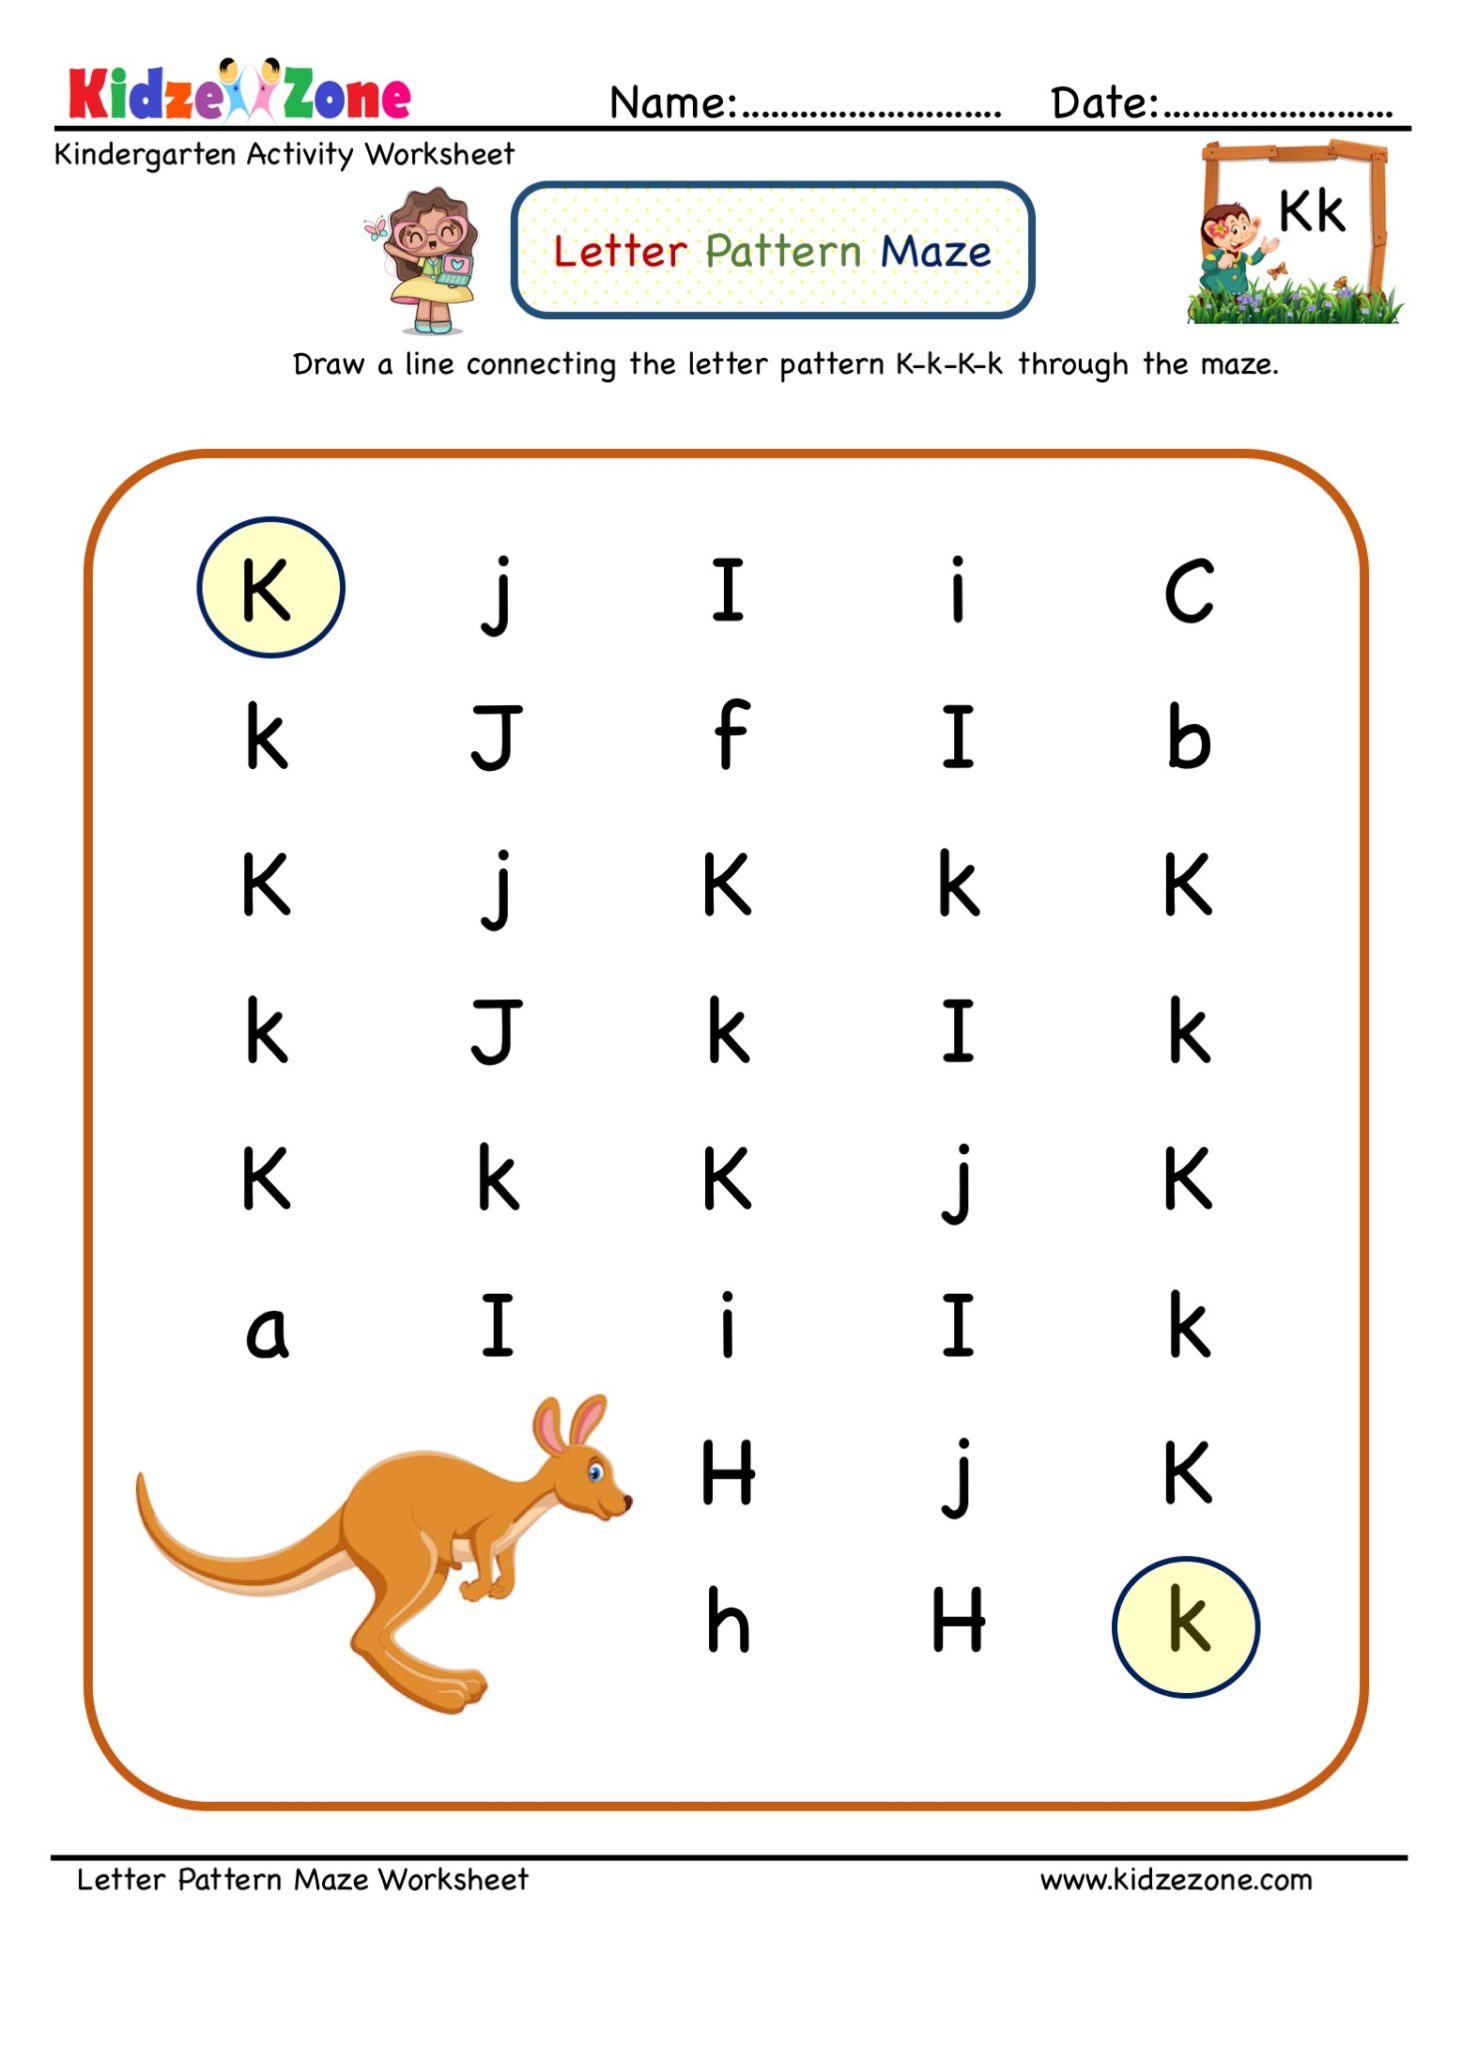 15-learning-the-letter-k-worksheets-kittybabylovecom-15-learning-the-letter-k-worksheets